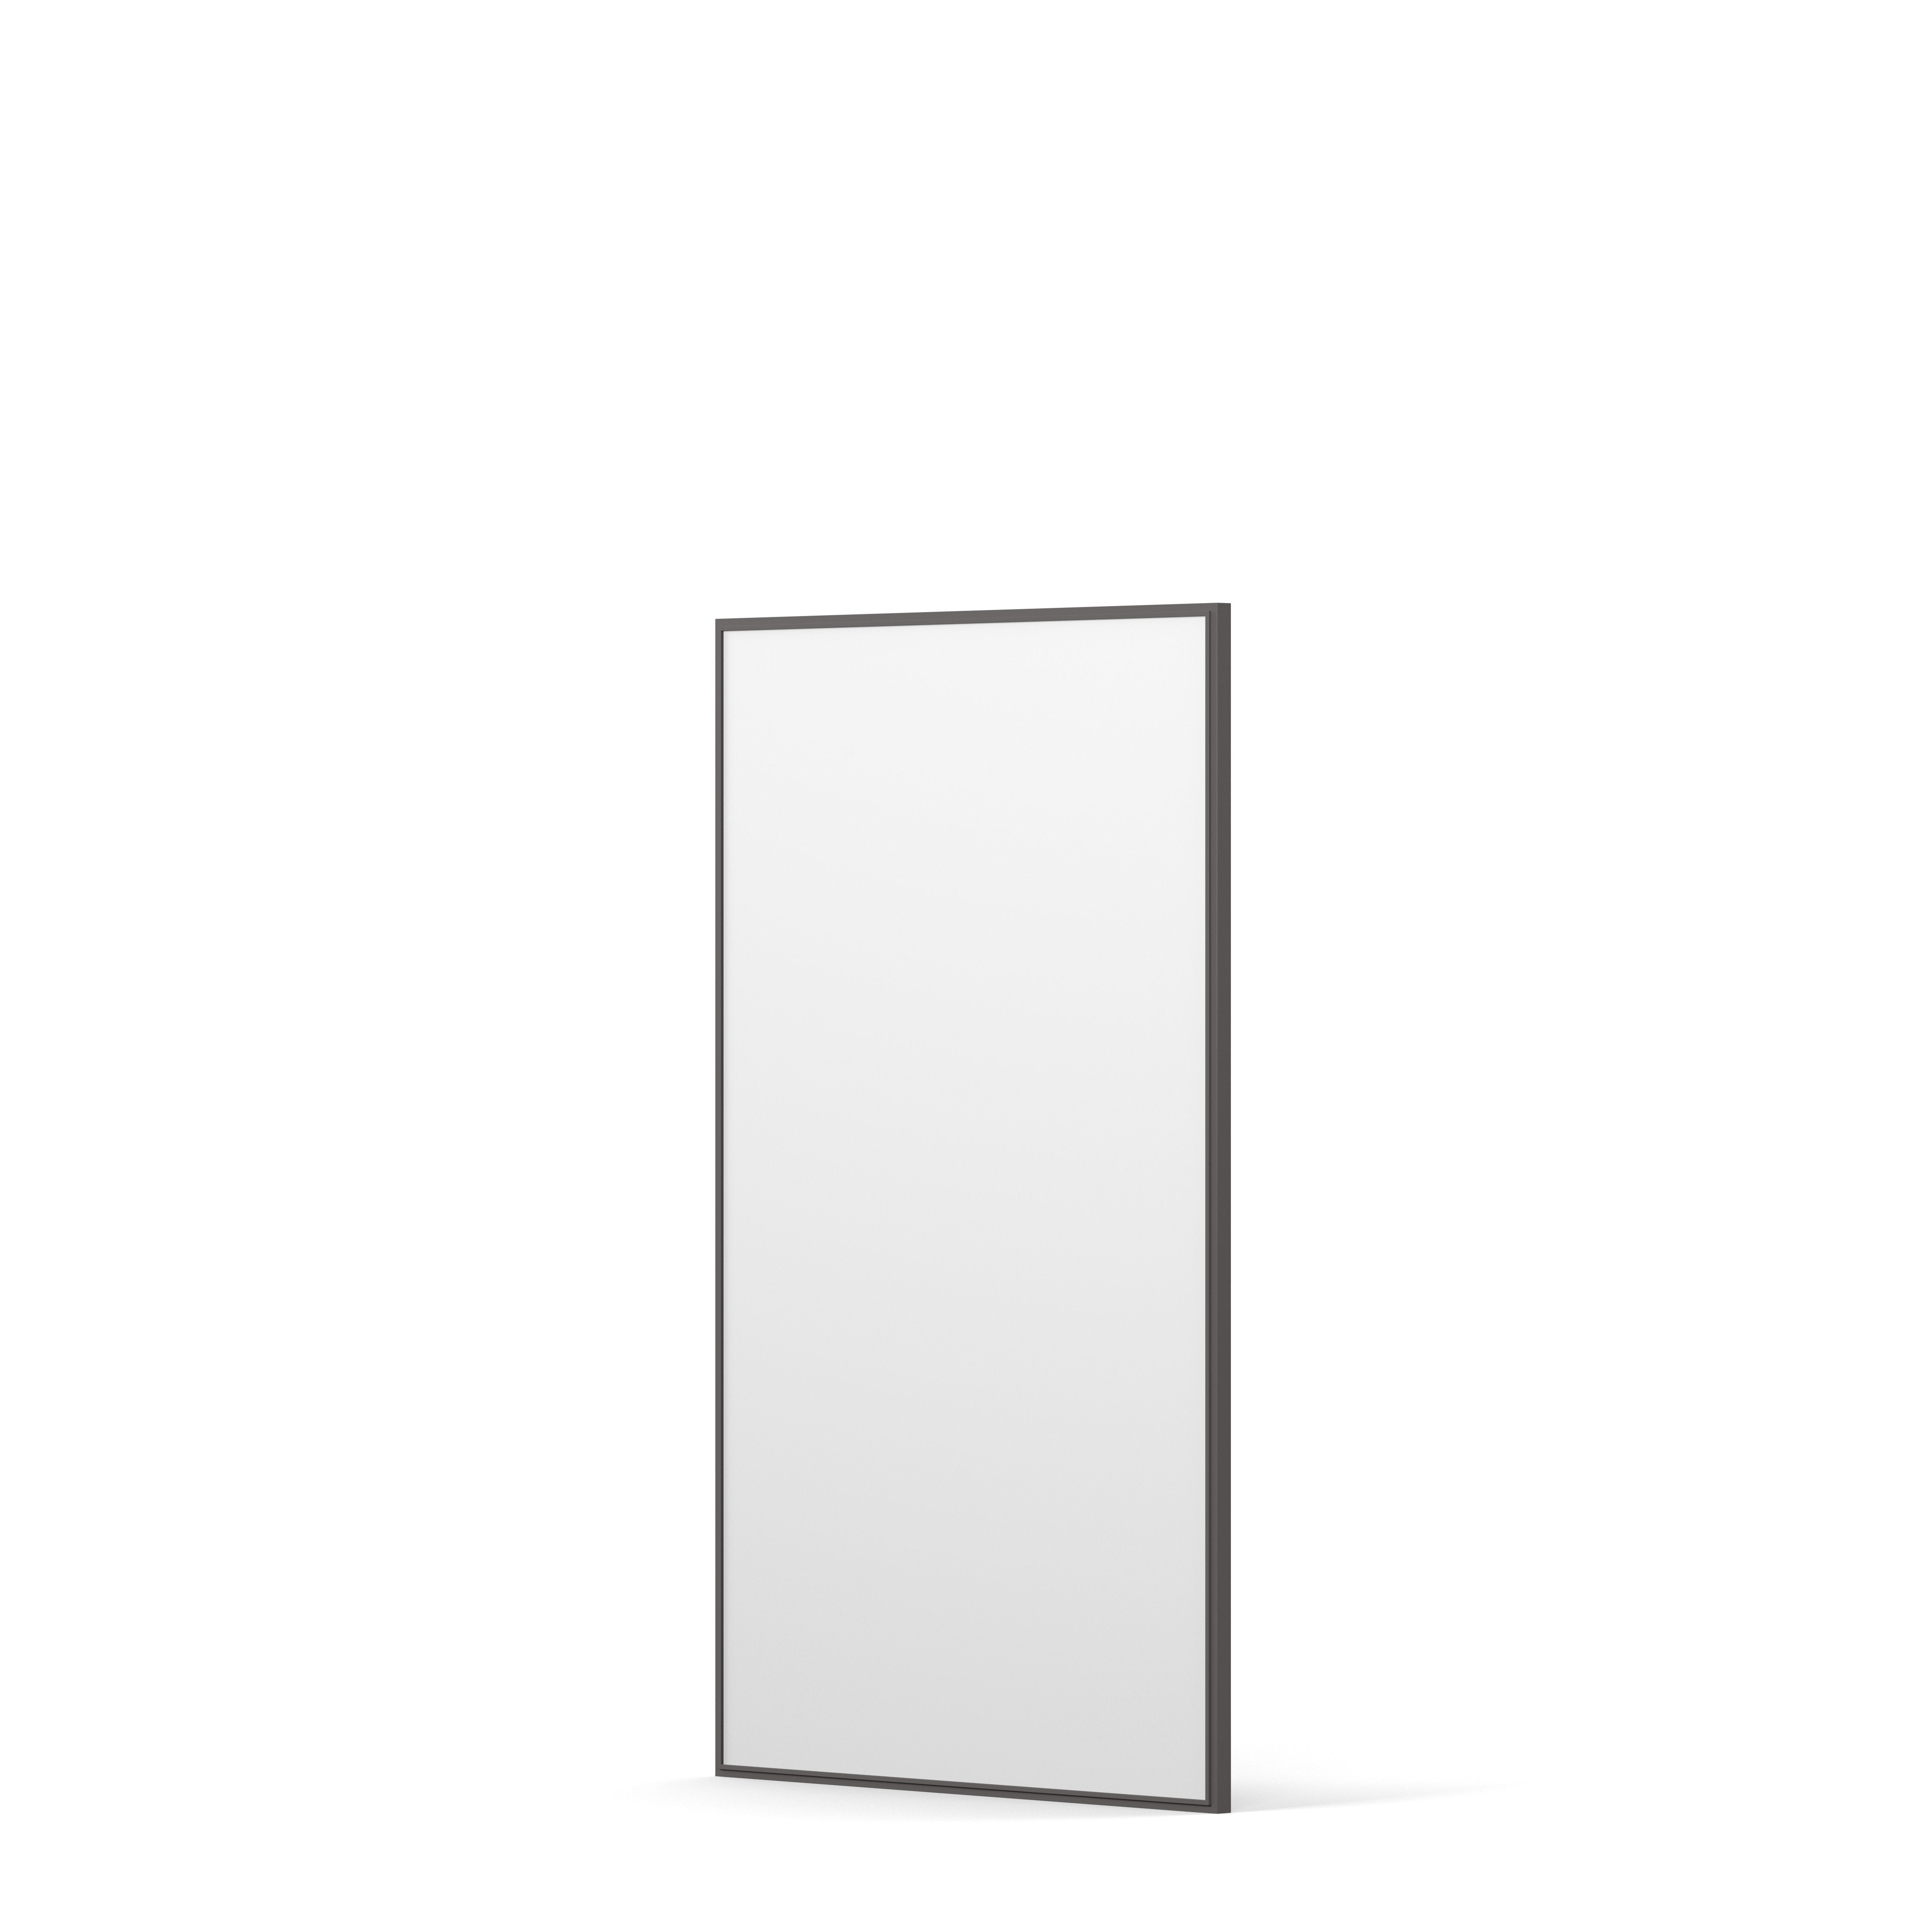 Englesson Cube Spegel Rektangulär #Variant_Edge Grey 